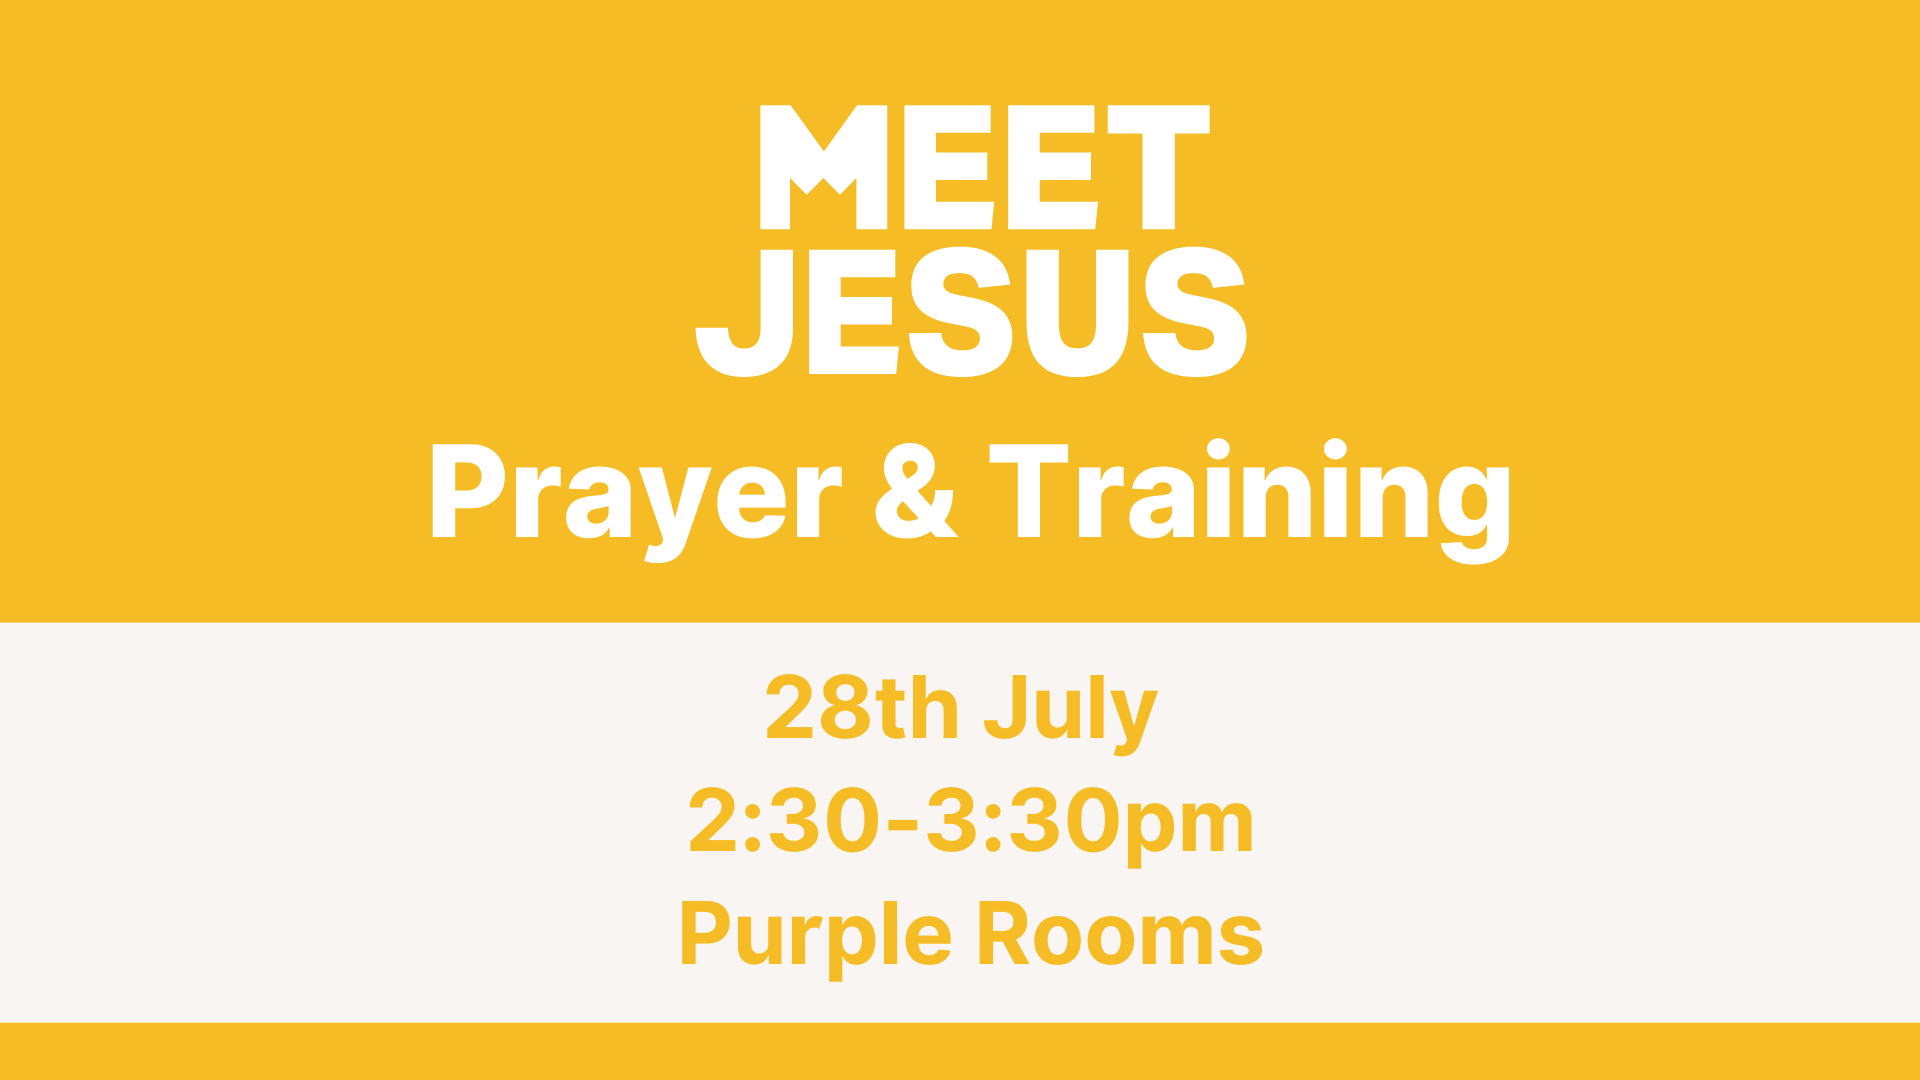 Carlton 4pm Meet Jesus Prayer & Training